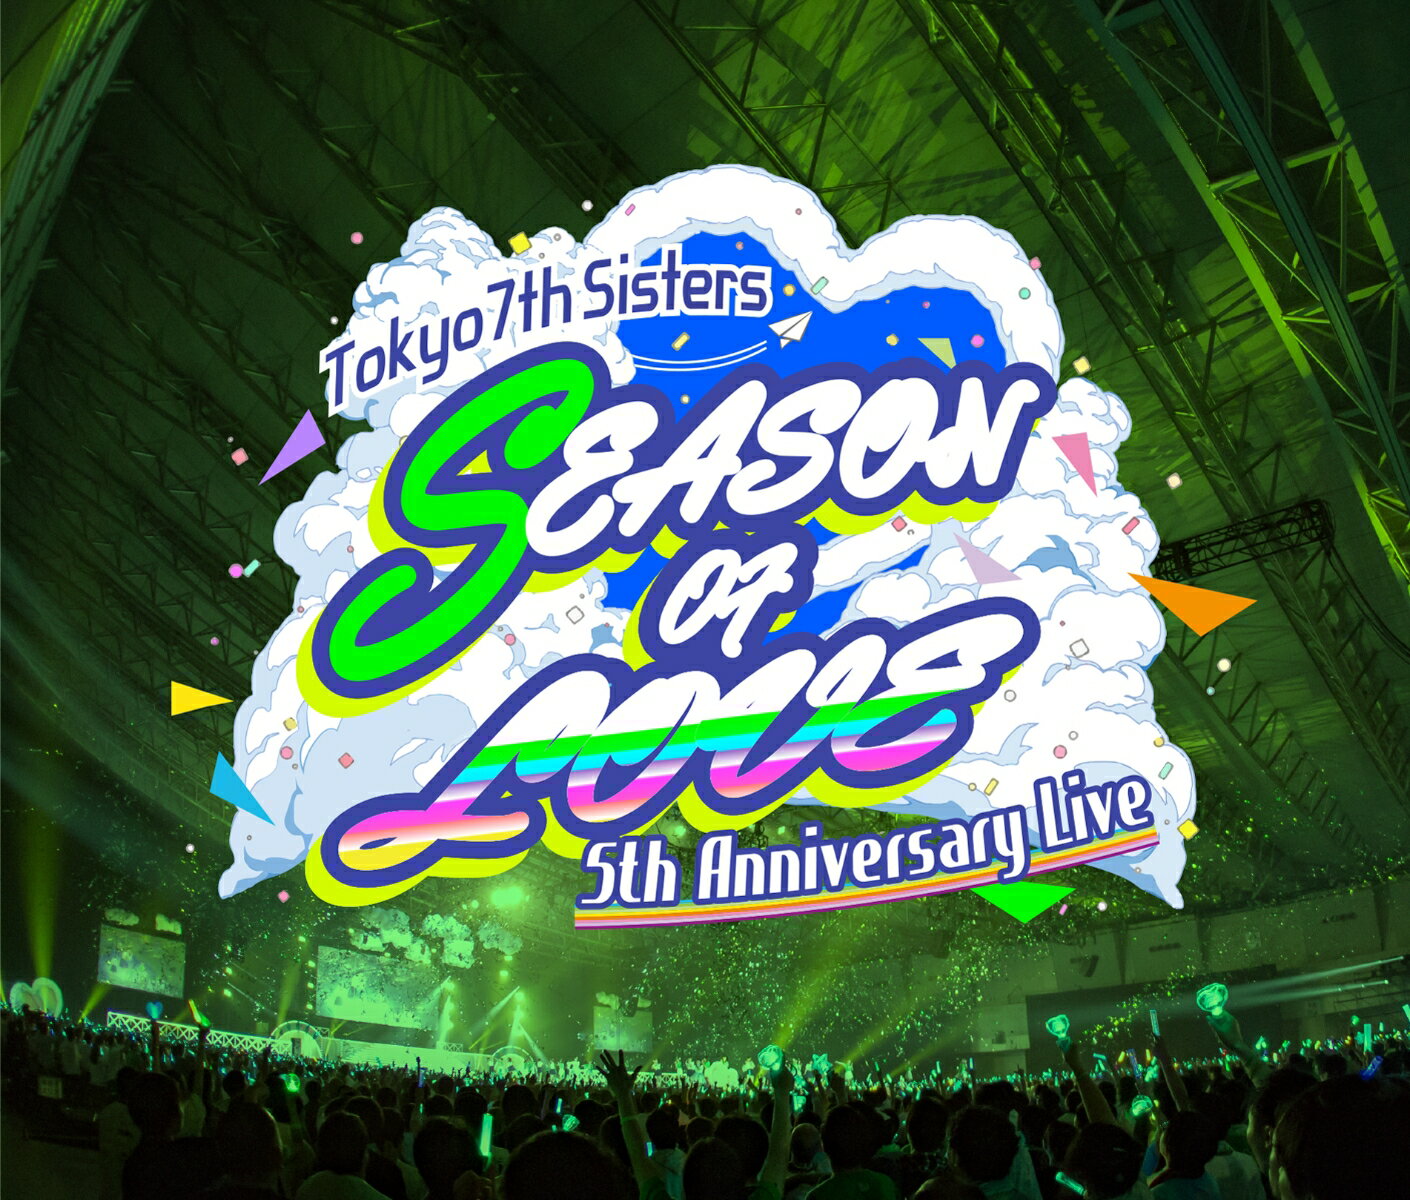 t7s 5th Anniversary Live -SEASON OF LOVE- in Makuhari Messe [ Tokyo 7th シスターズ ]